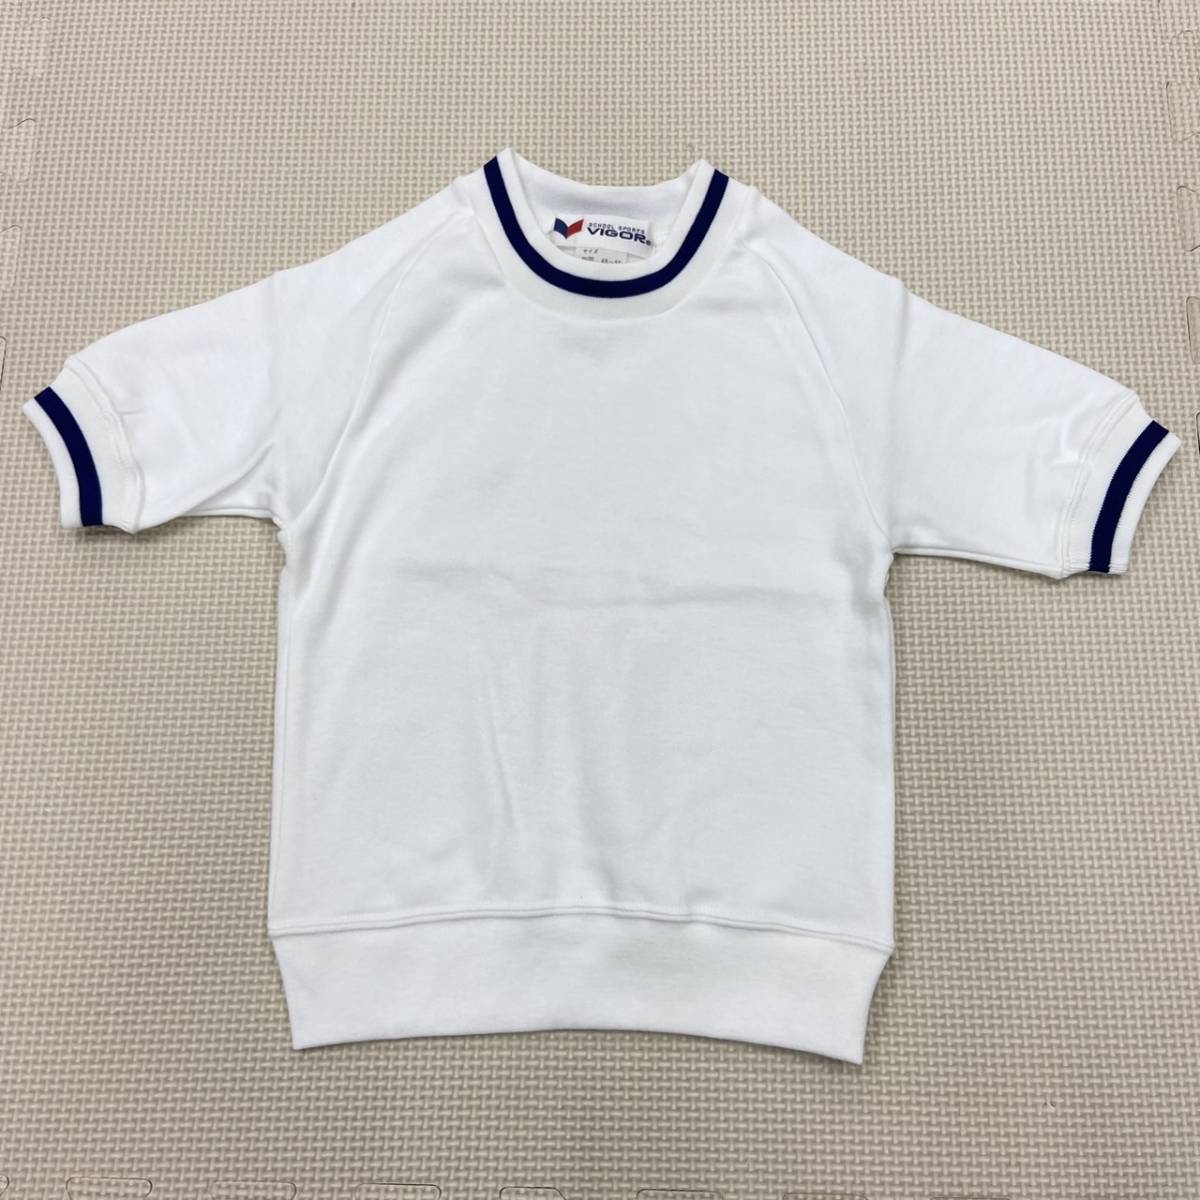 (M)058 new goods [ VIGOR ]b.ga- training shirt size 100 2 sheets set / short sleeves / circle collar /la gran / child /../ children's / gym uniform / gym uniform / motion put on / made in Japan 